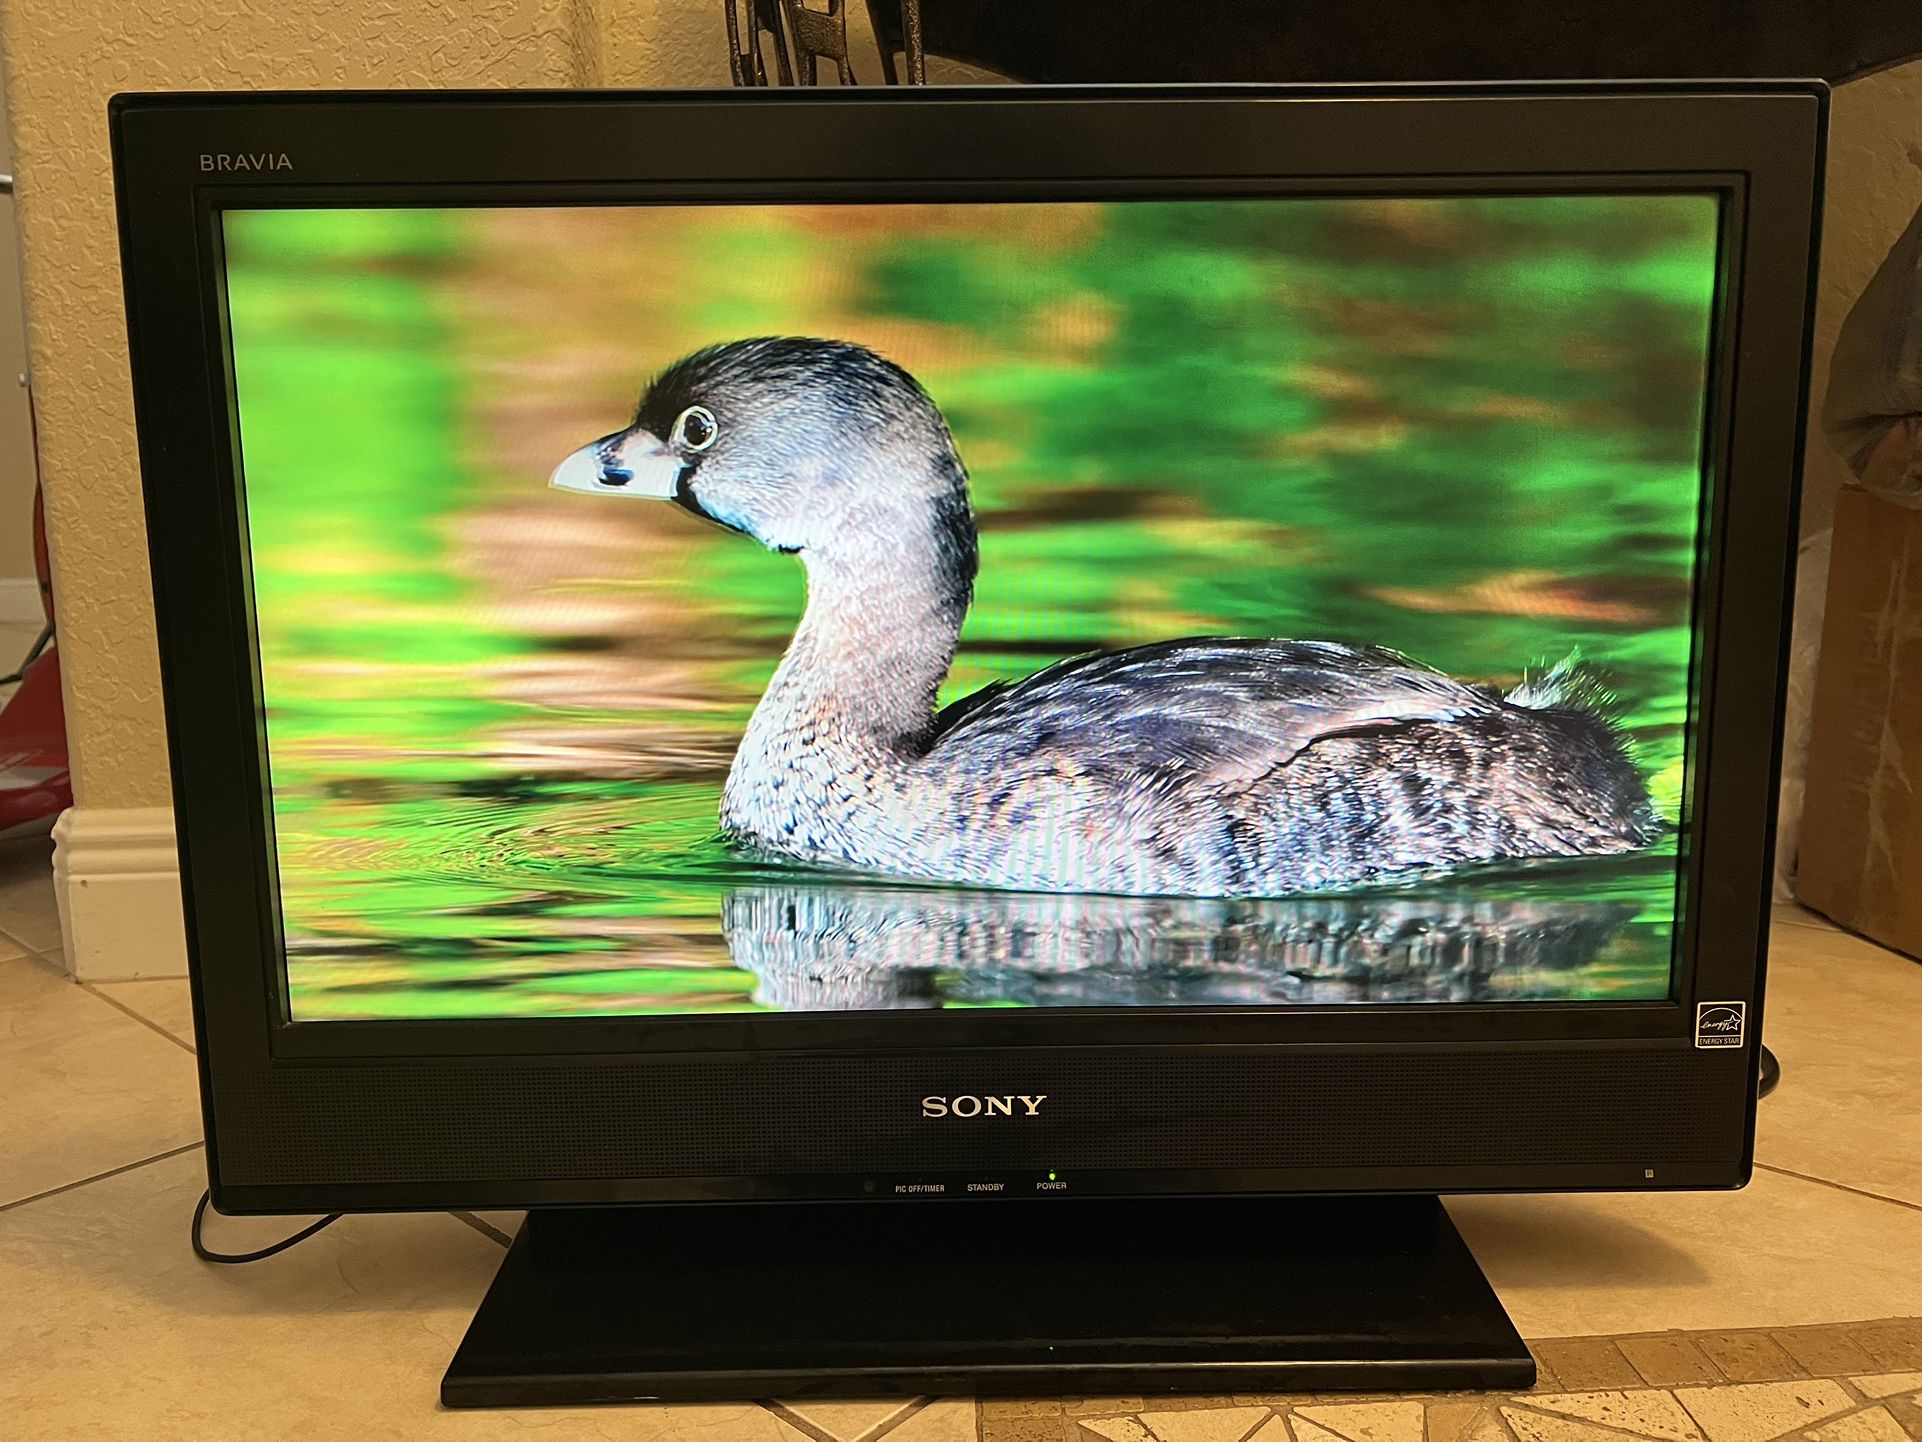 Sony 26” LCD Tv 